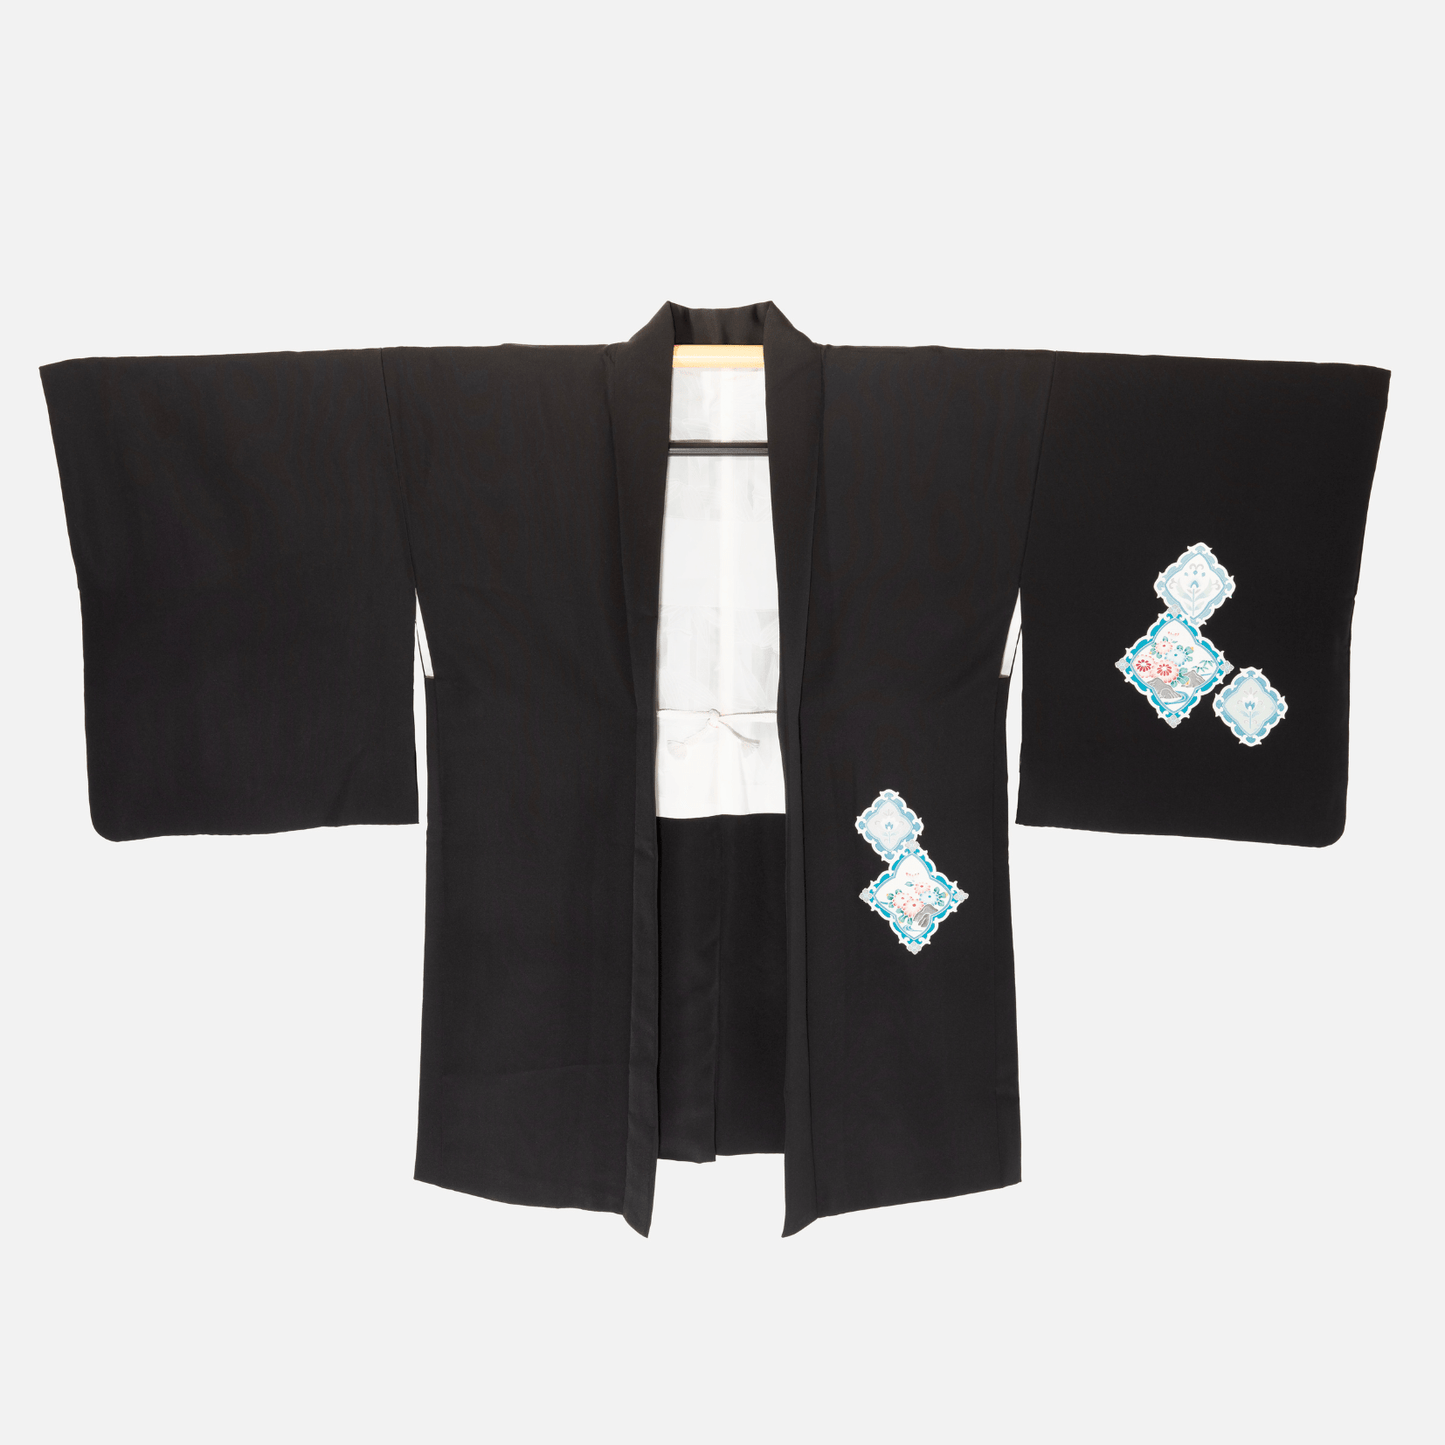 Vintage Black Haori (Kimono Jacket) with Flowers patterns